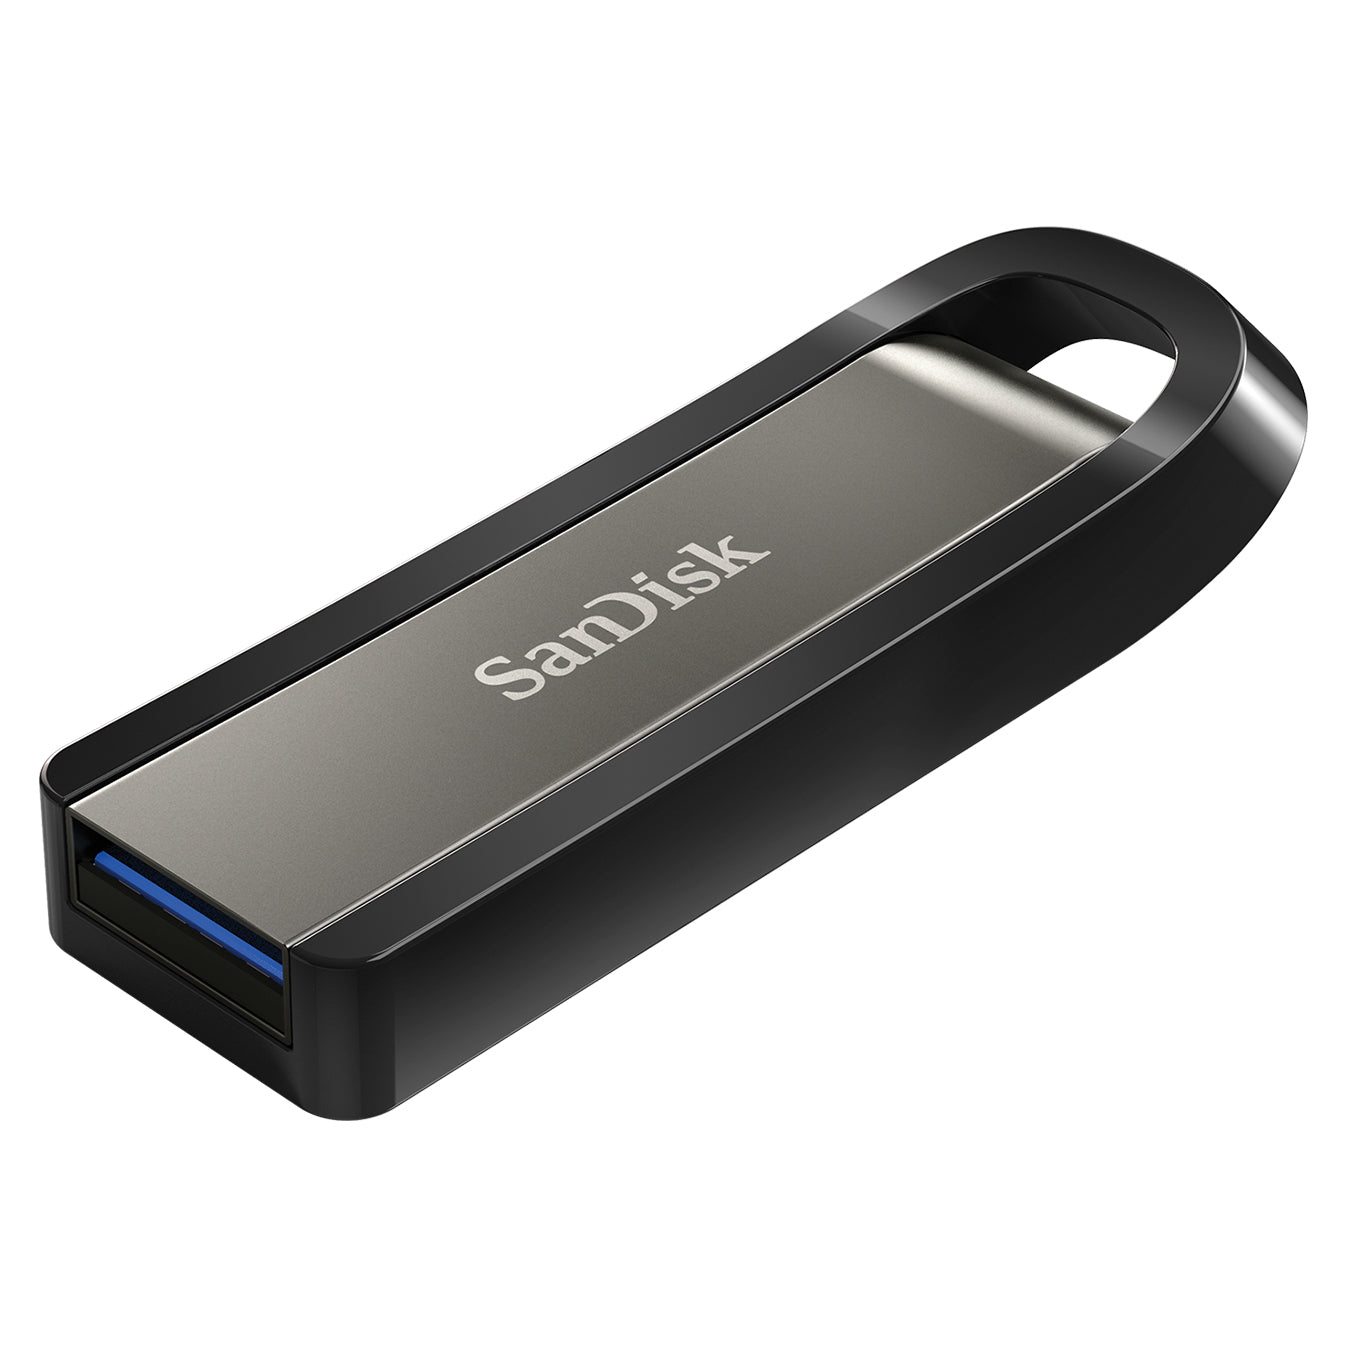 SanDisk Extreme Go USB USB 3.2 Flash Drive